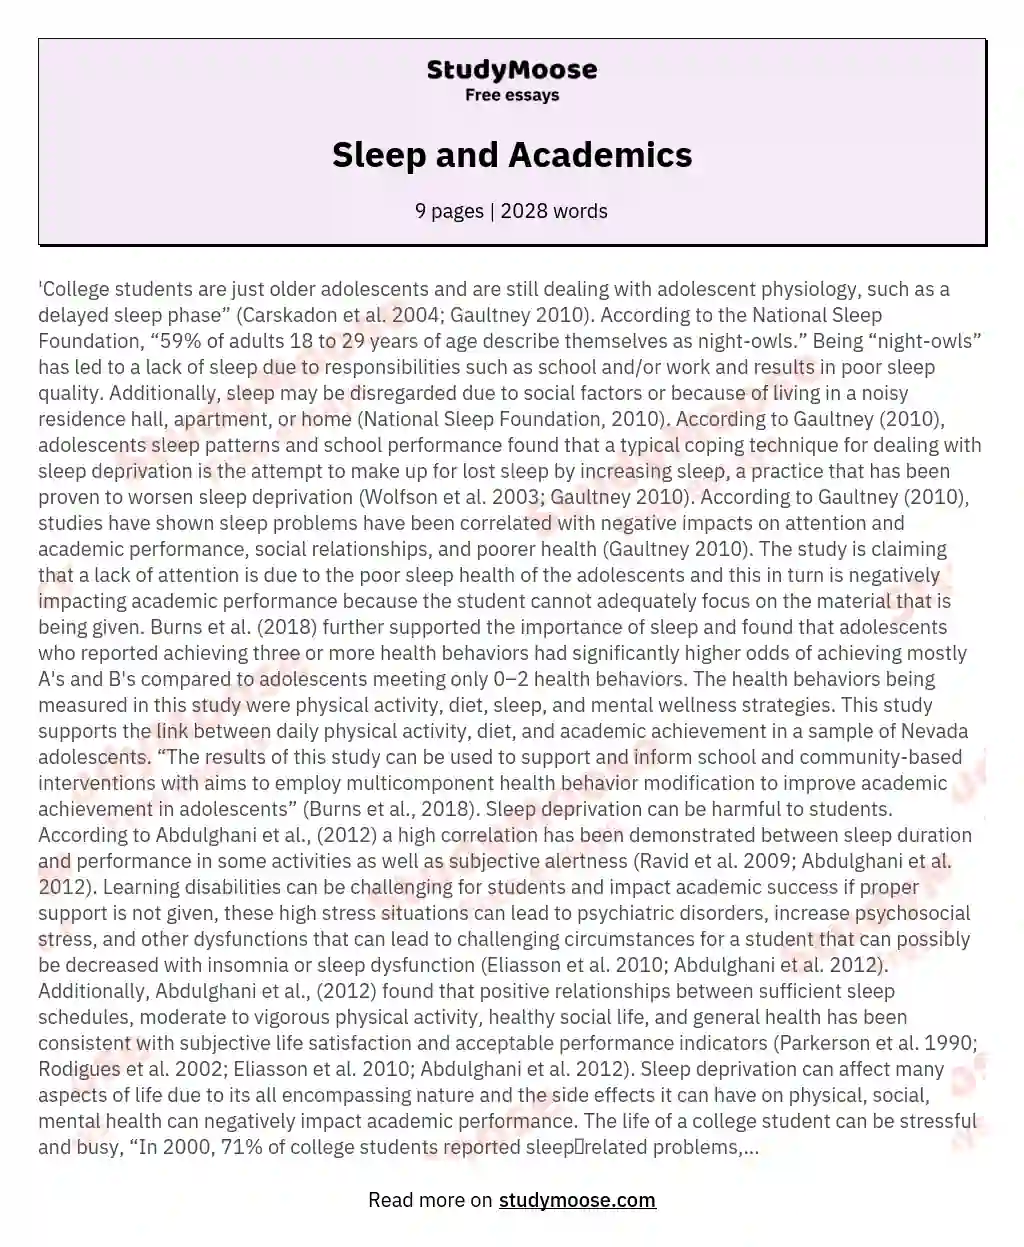 Sleep and Academics essay